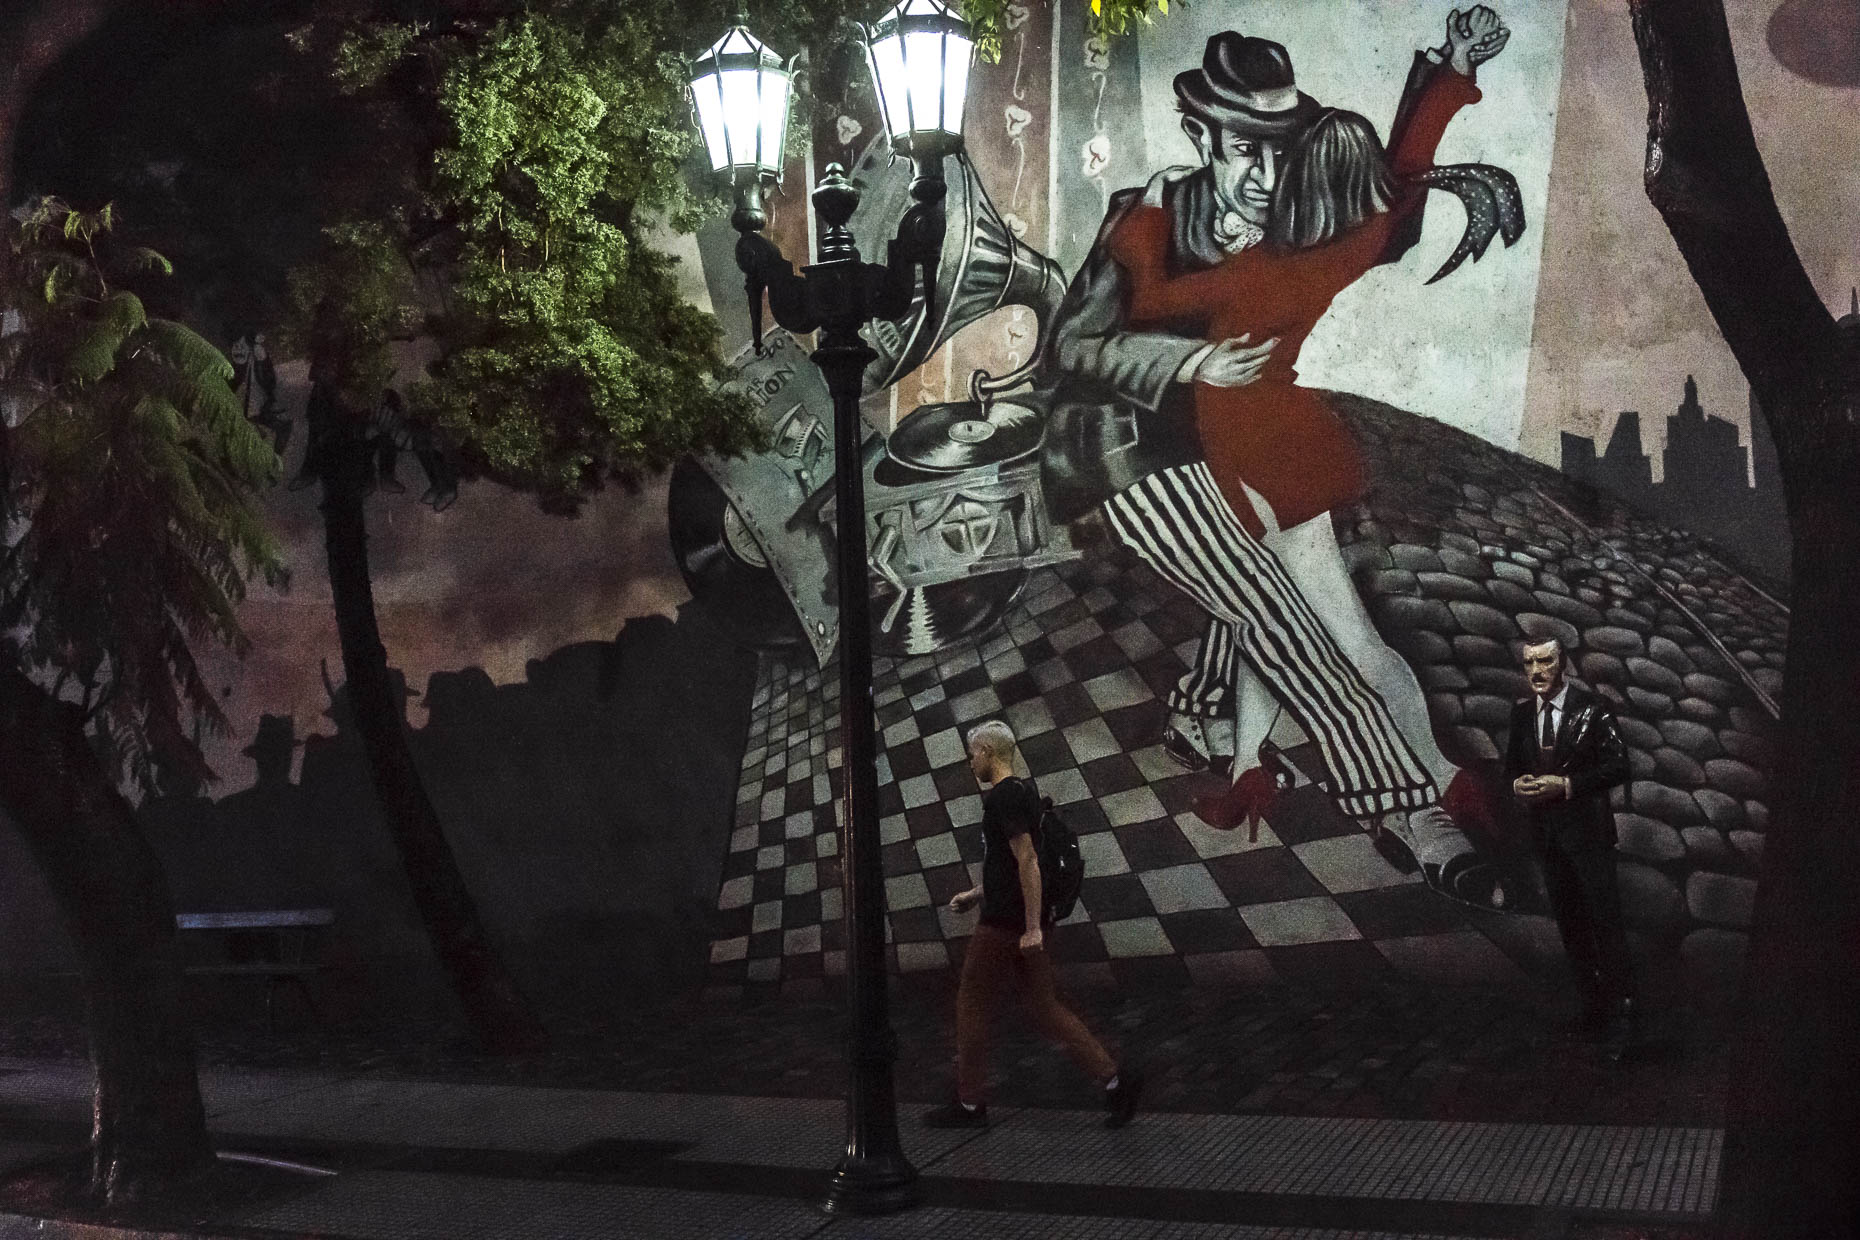 Man walks past a painted mural depicting a Tango dance scene.